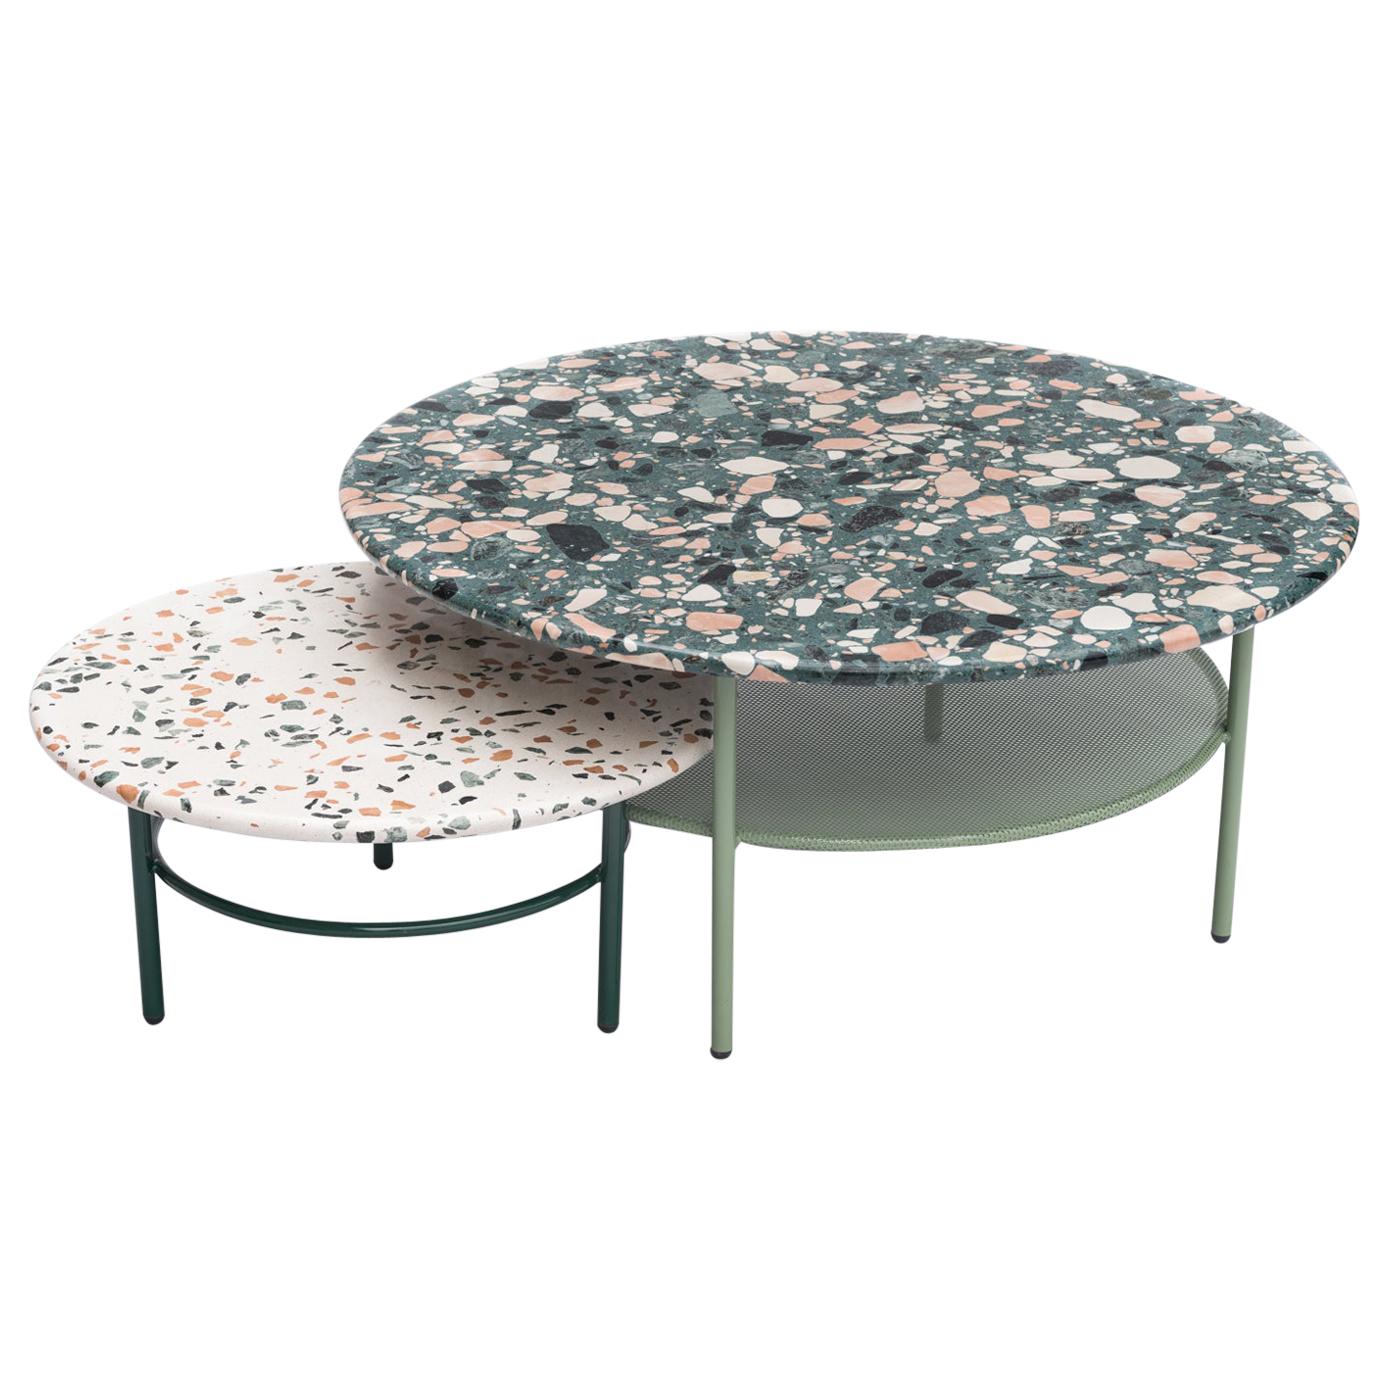 Set of Lira Coffee Tables, Terrazzo top, Contemporary Mexican Design